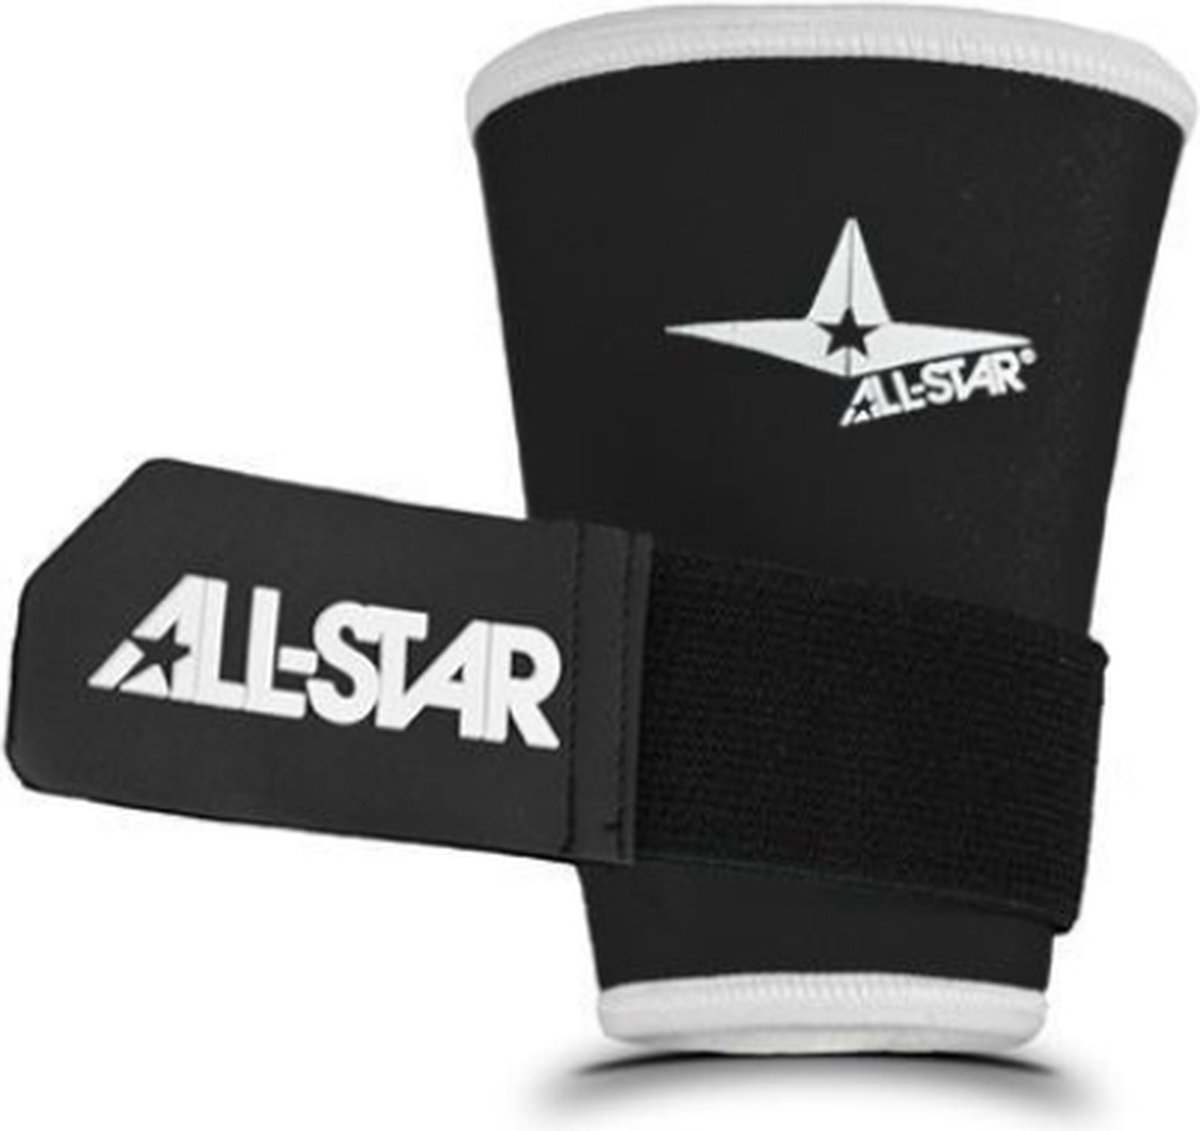 All Star WG5001 Compression Wristband with Strap XL Black